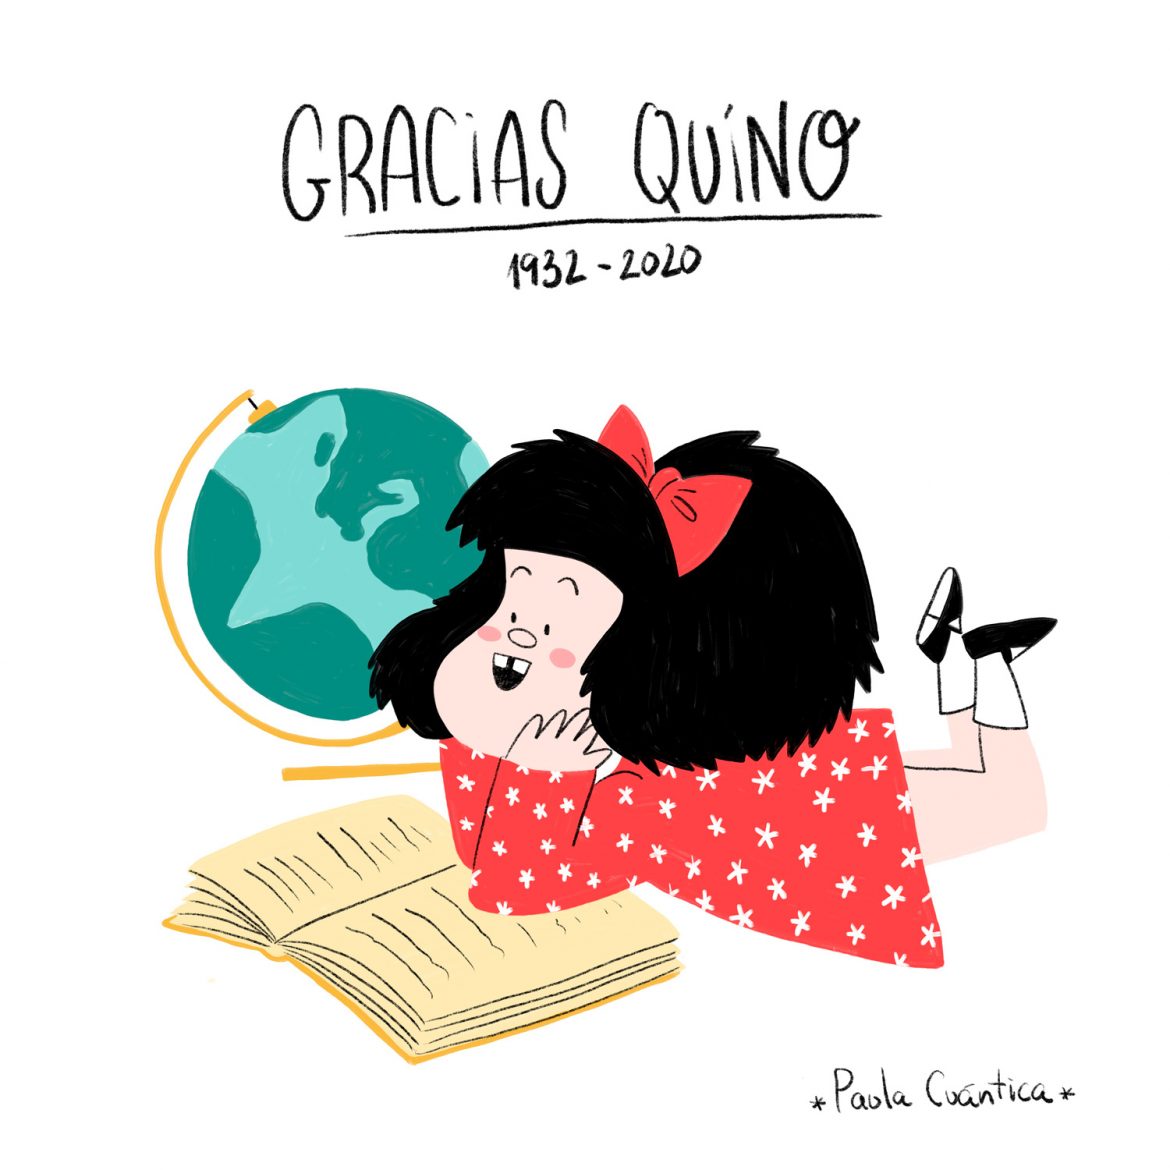 mafalda homenaje 2020 quino proyecto kahlo